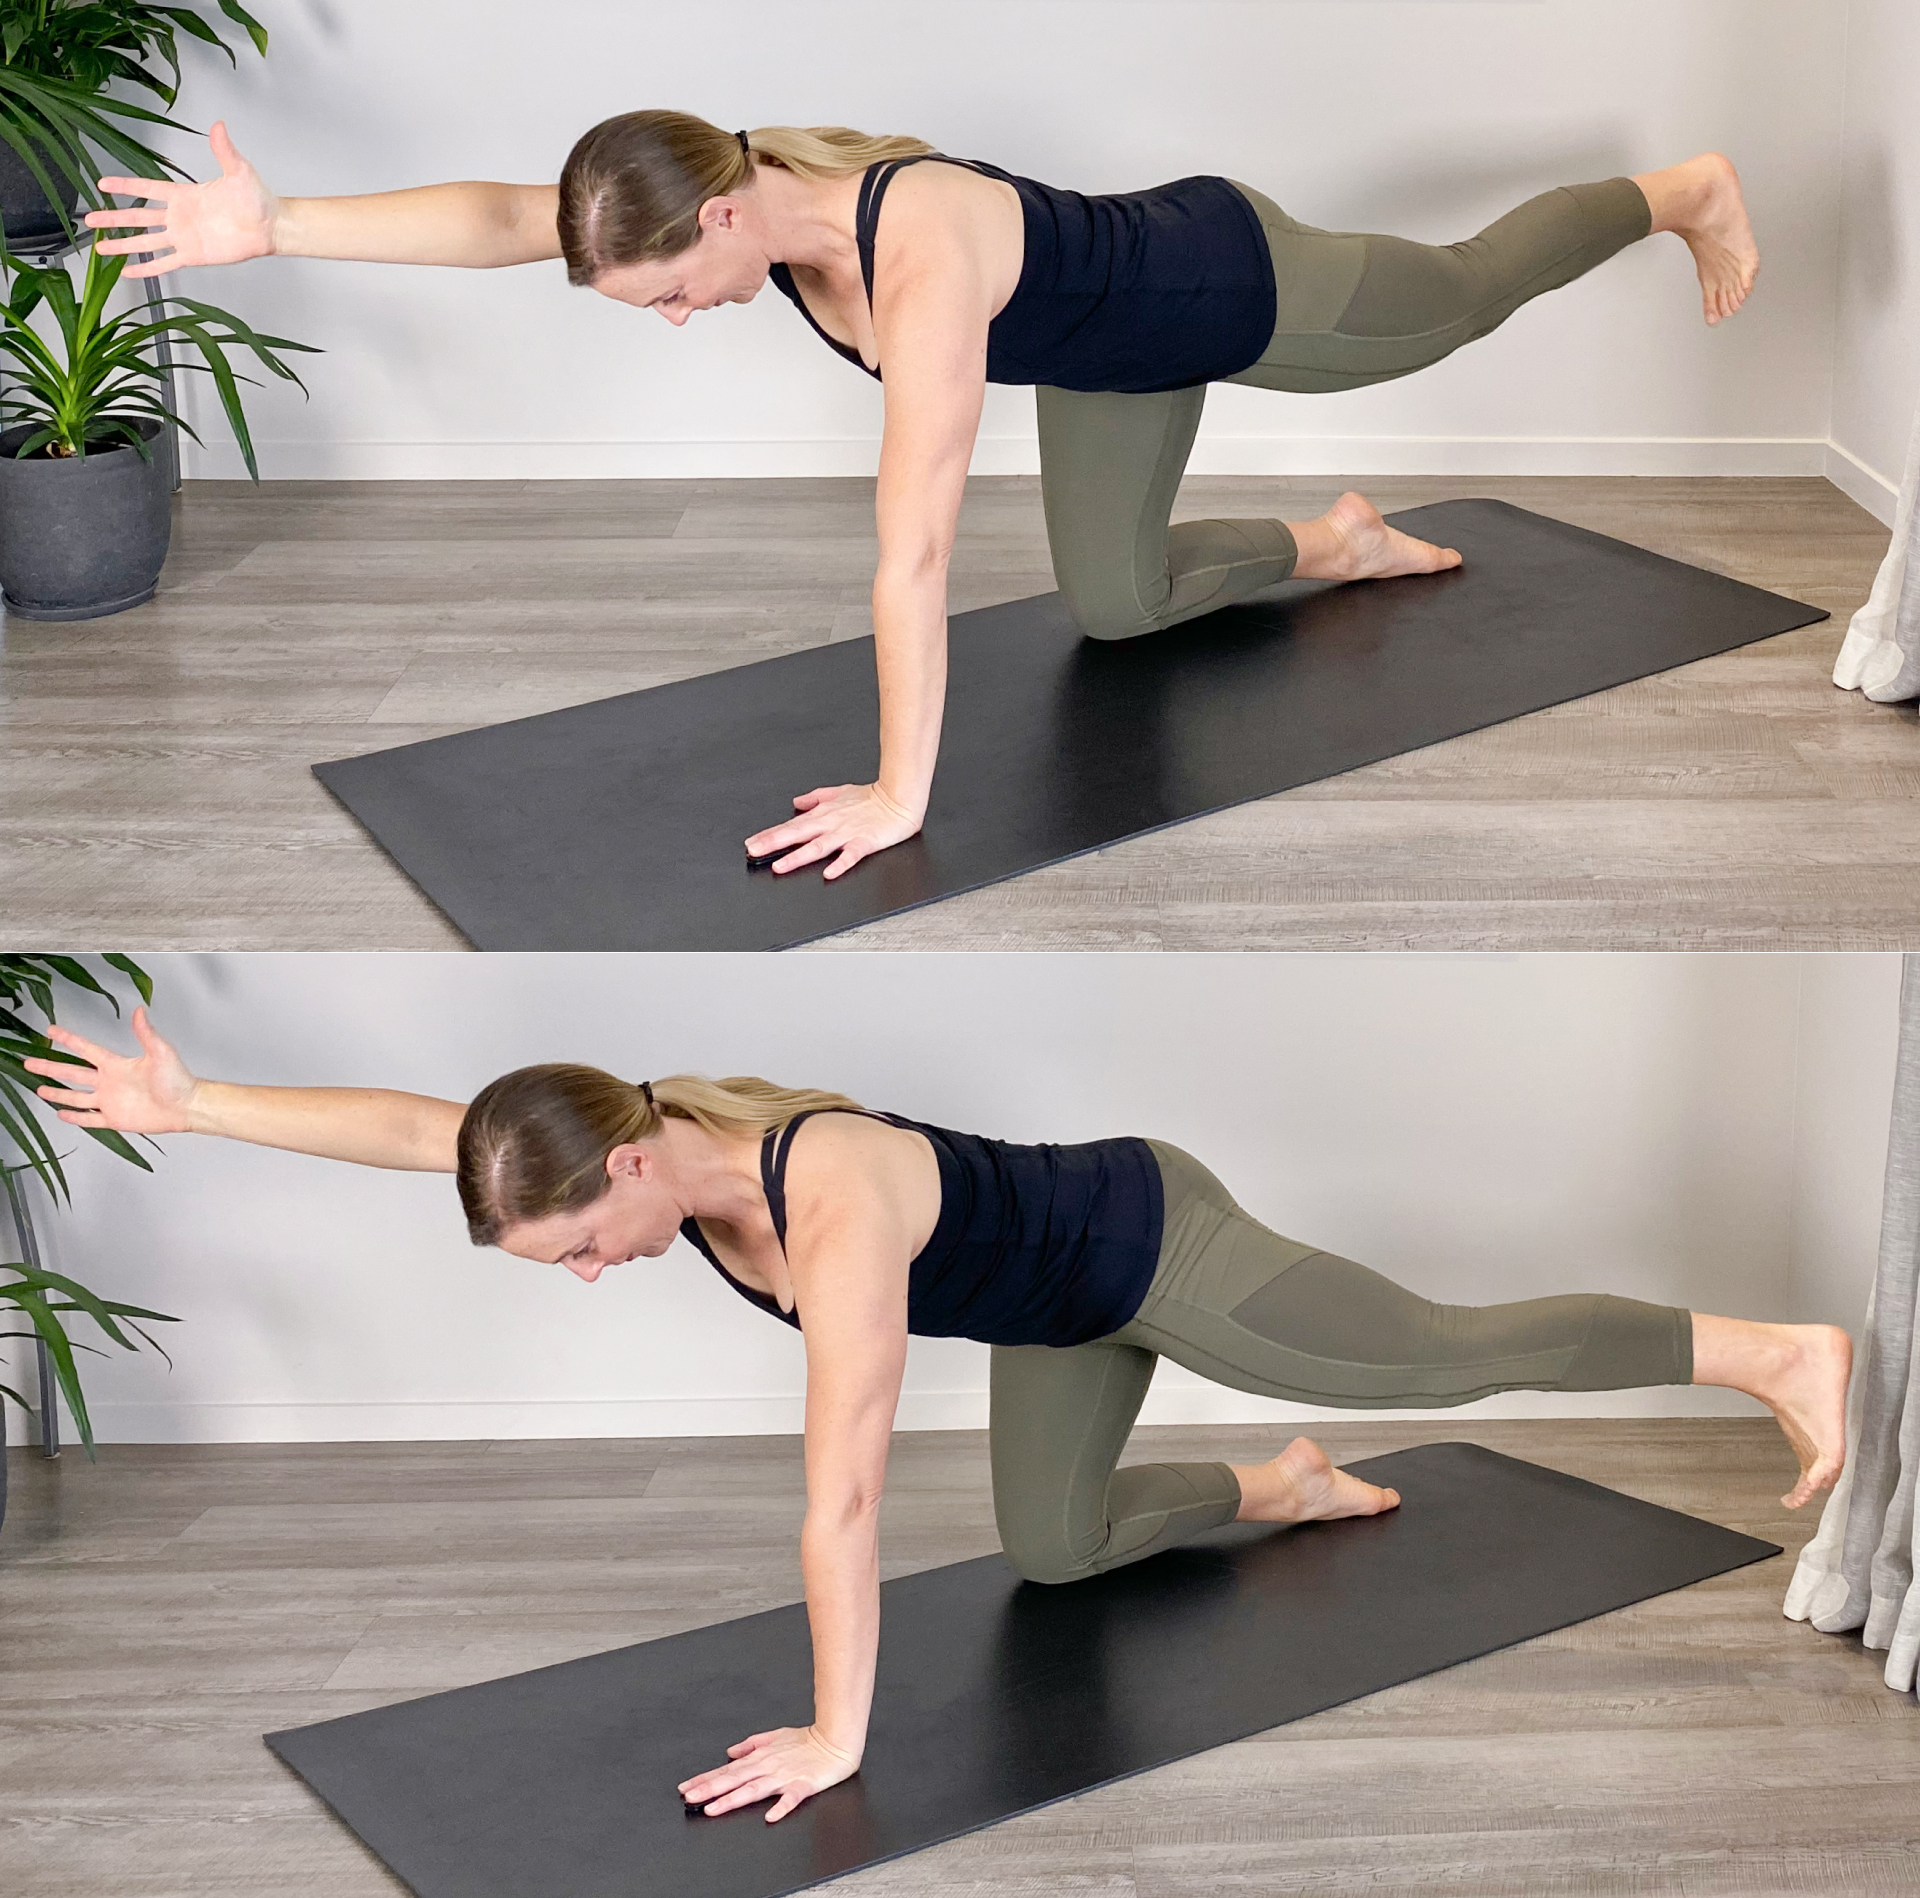 Ardha Matsyendrasana​ - 6 yoga poses to relieve constipation | The Economic  Times